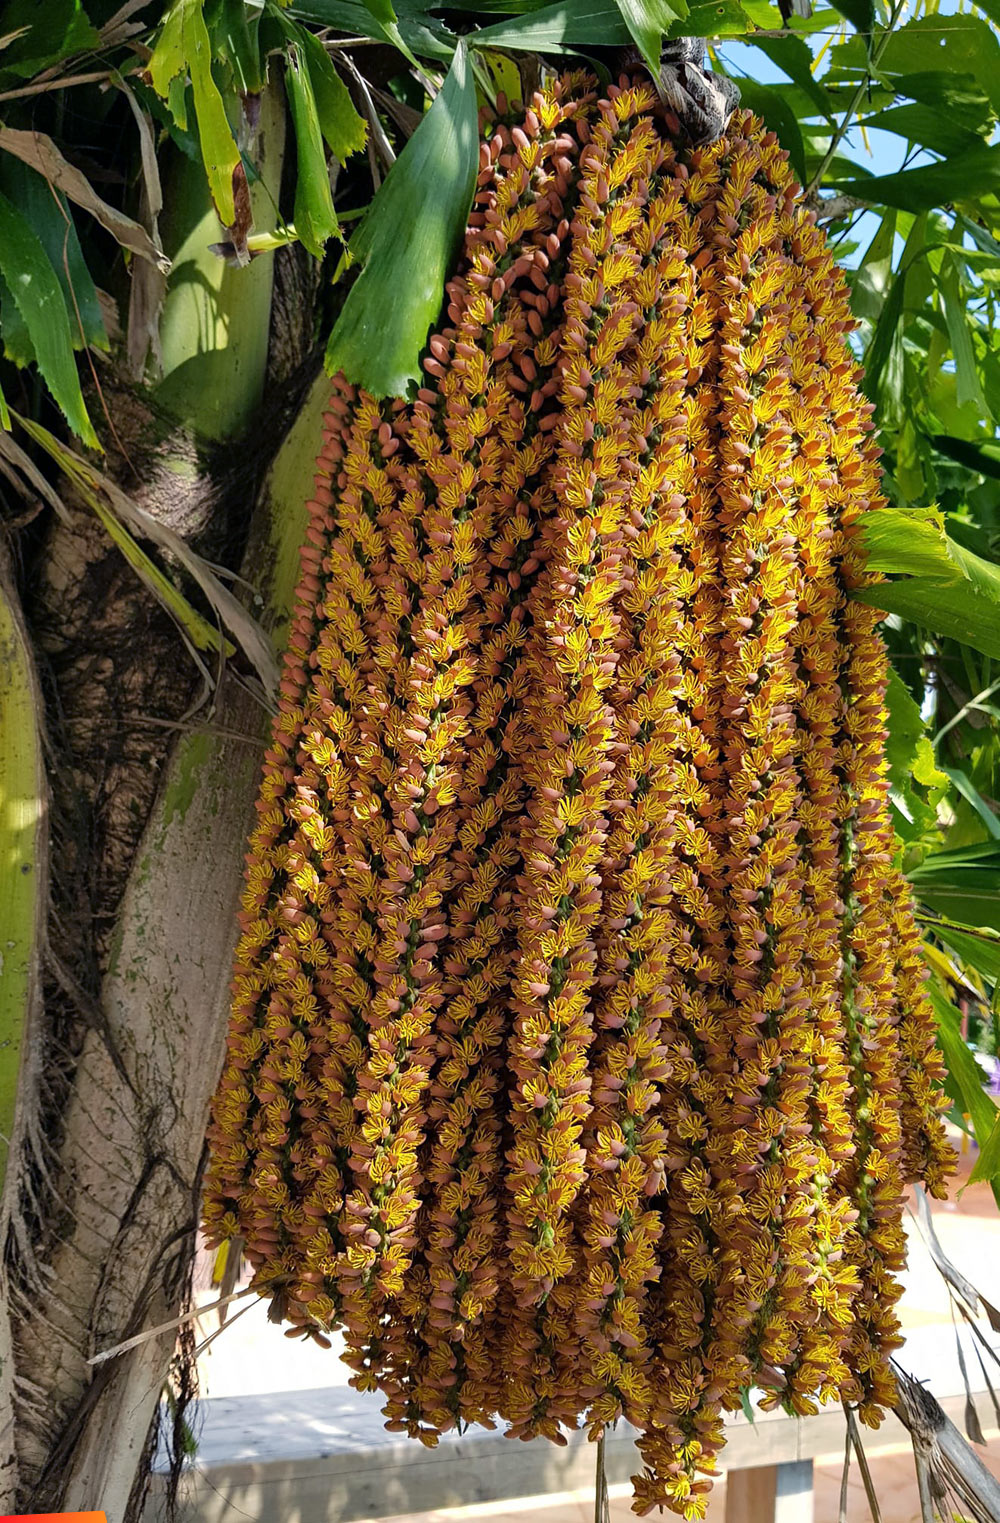 Fishtail palm, golden locks